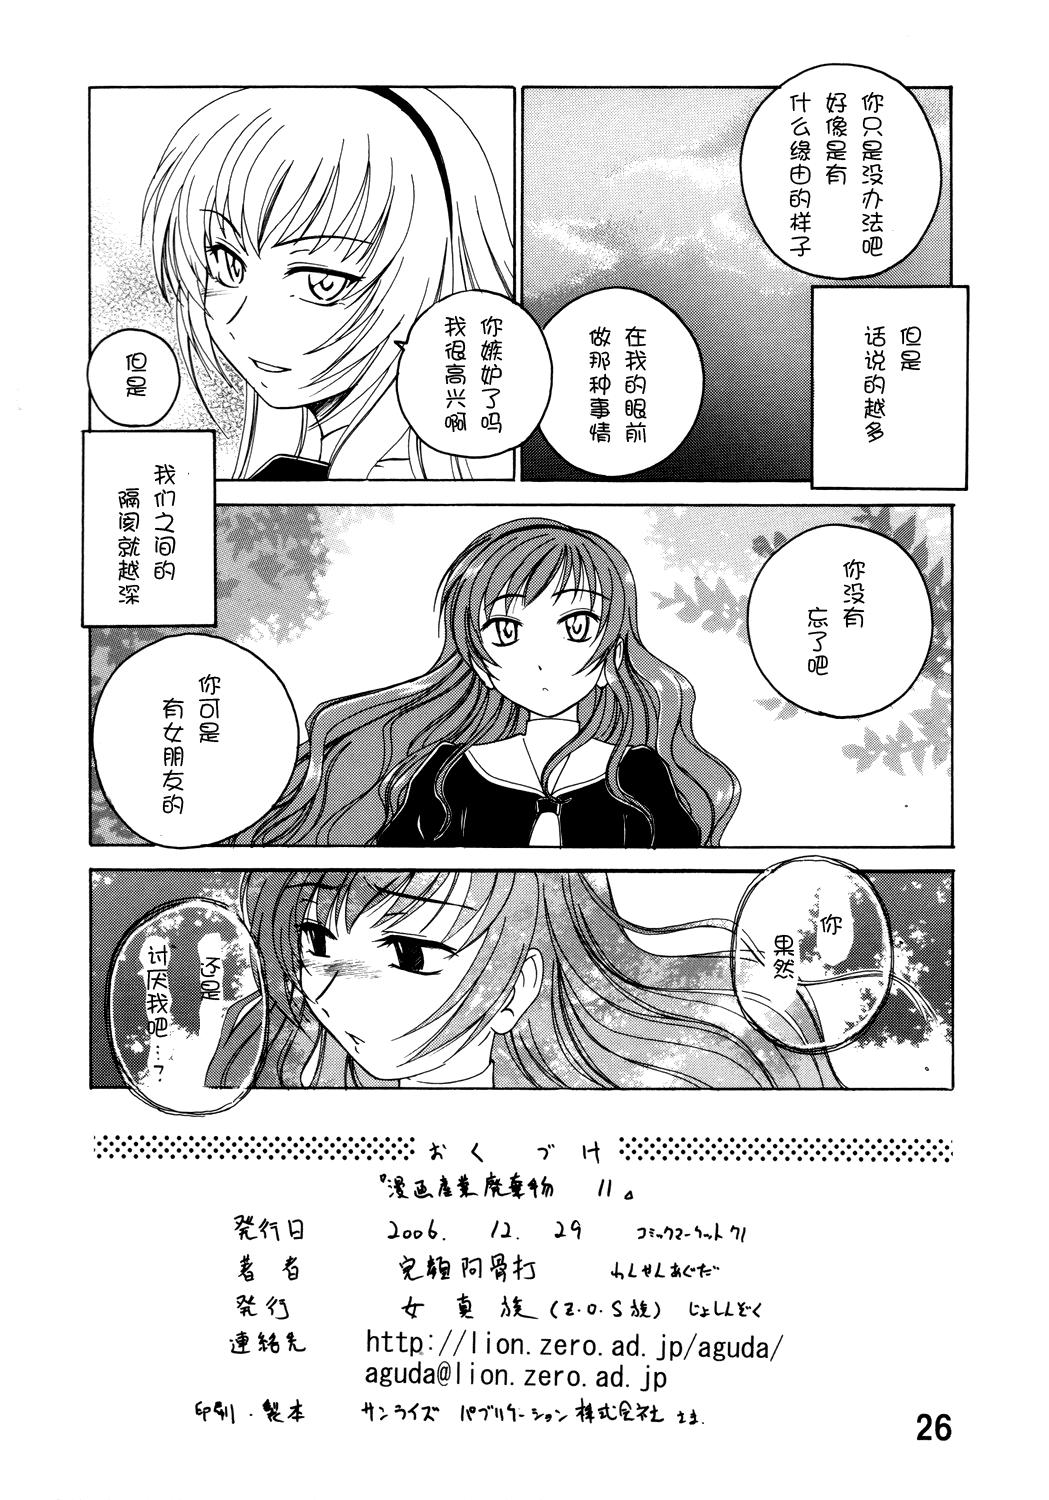 Mature Woman Manga Sangyou Haikibutsu 11 - Comic Industrial Wastes 11 - Princess princess Africa - Page 25